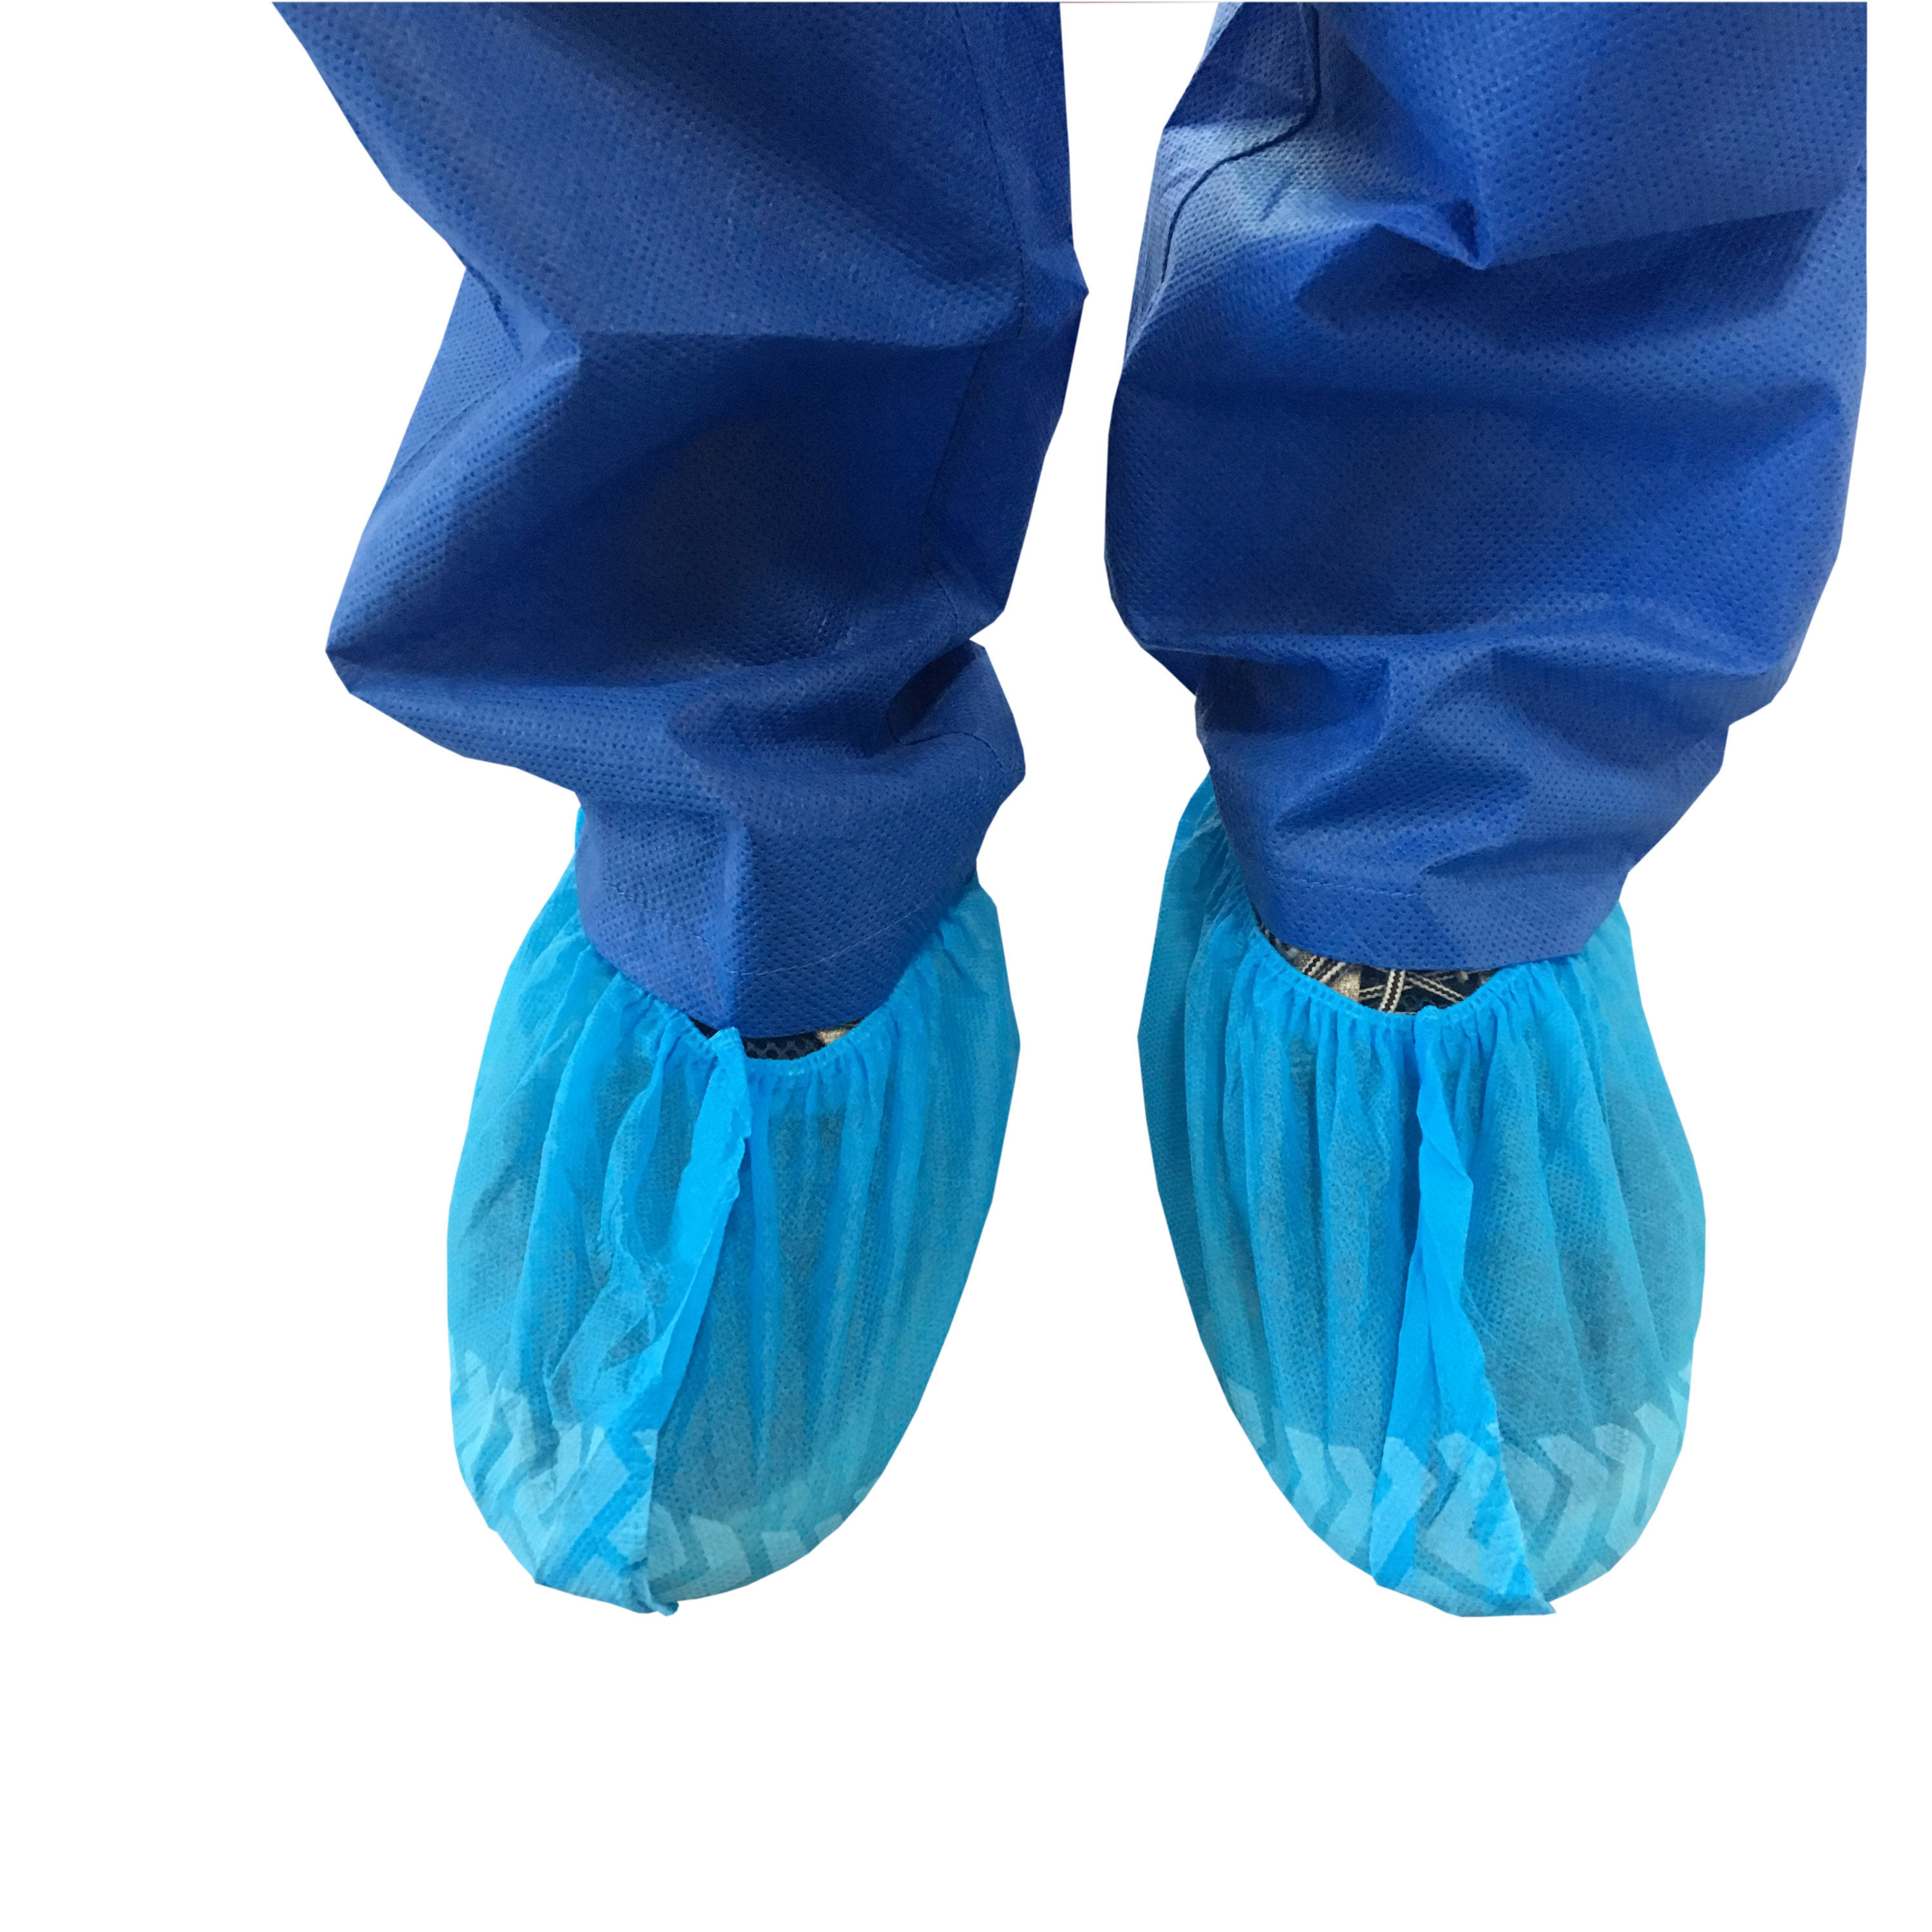  Disposable Non Woven PP/CPE Shoe Cover blue non woven medical non slip disposable shoe covers